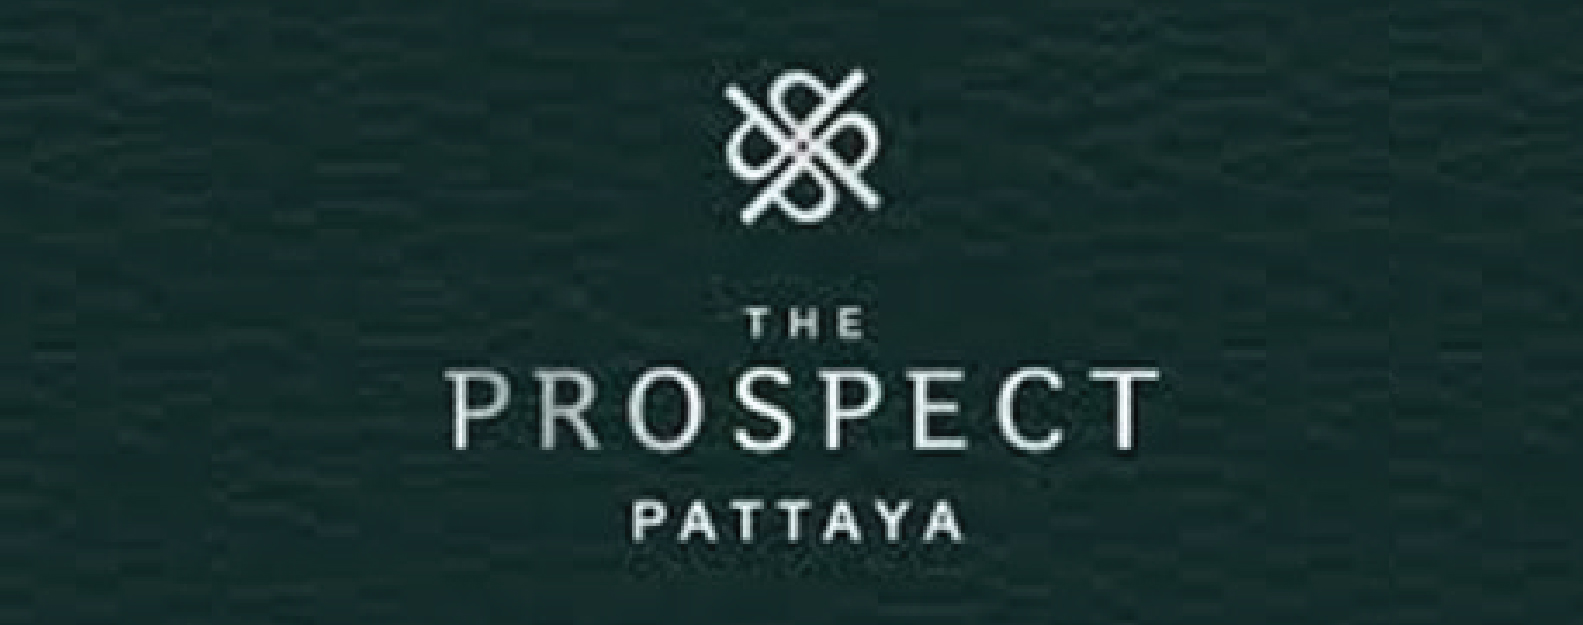 The Prospect Pattaya